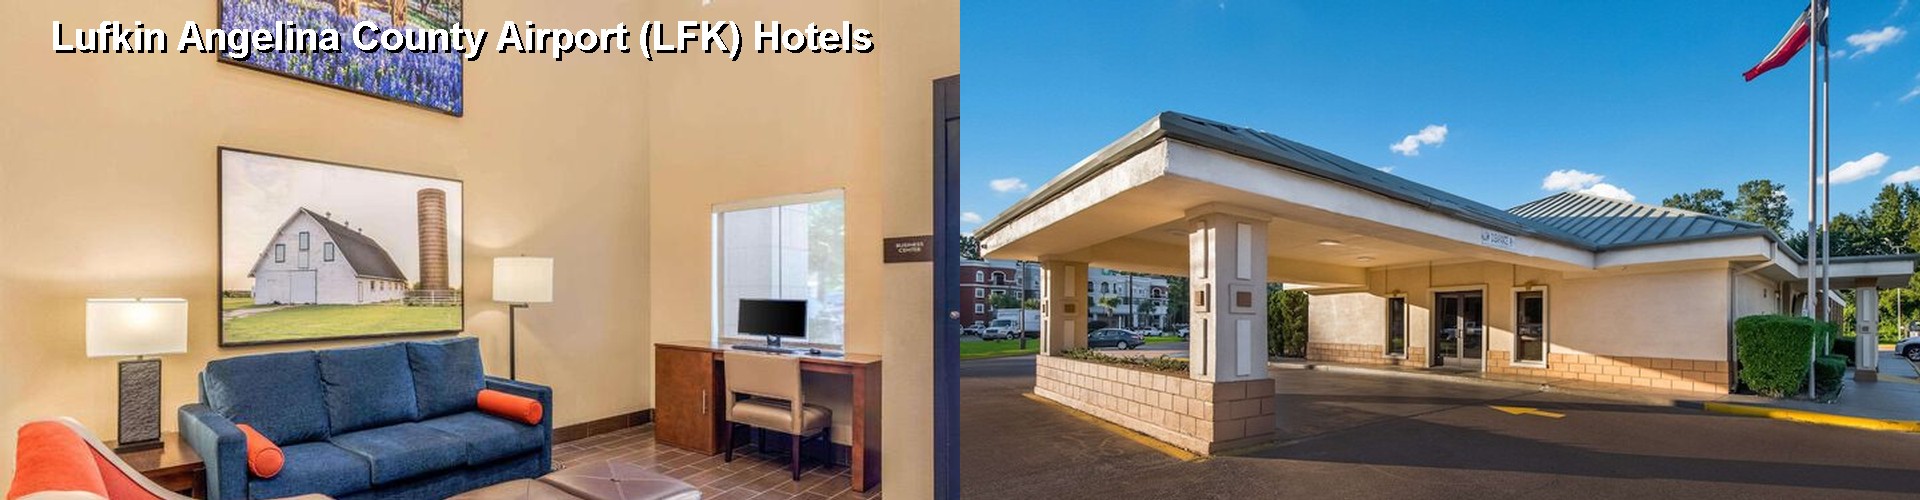 5 Best Hotels near Lufkin Angelina County Airport (LFK)